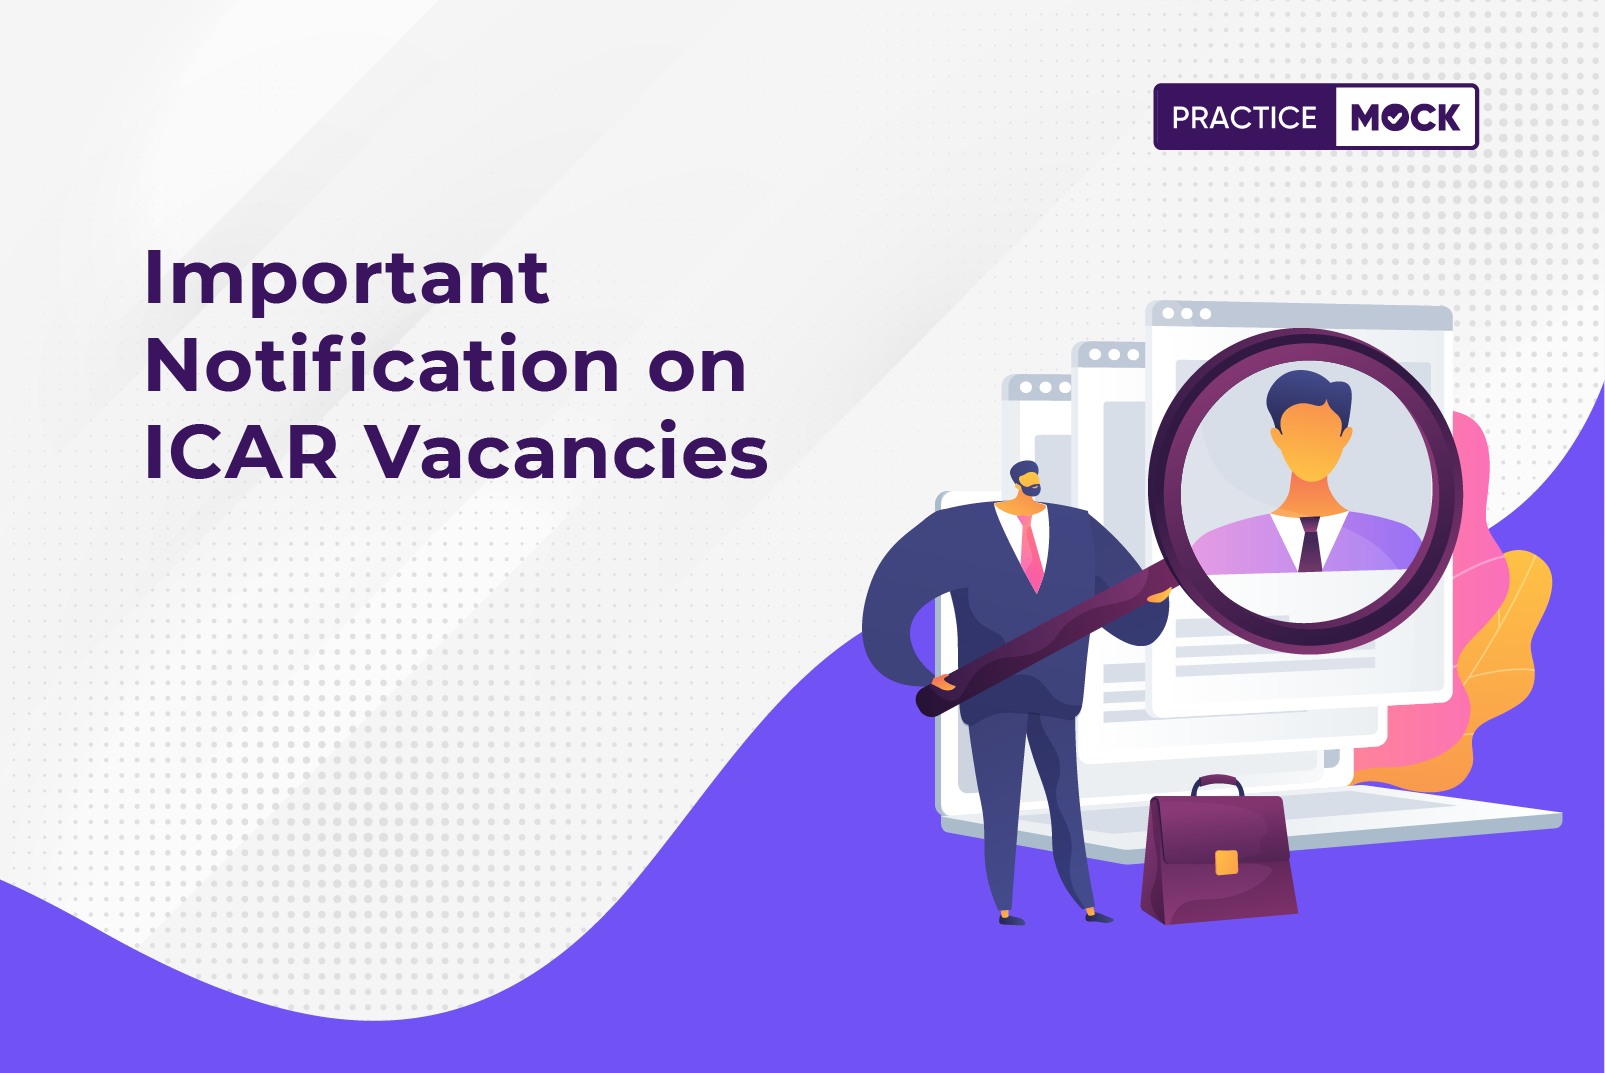 Important Notification on ICAR Vacancies